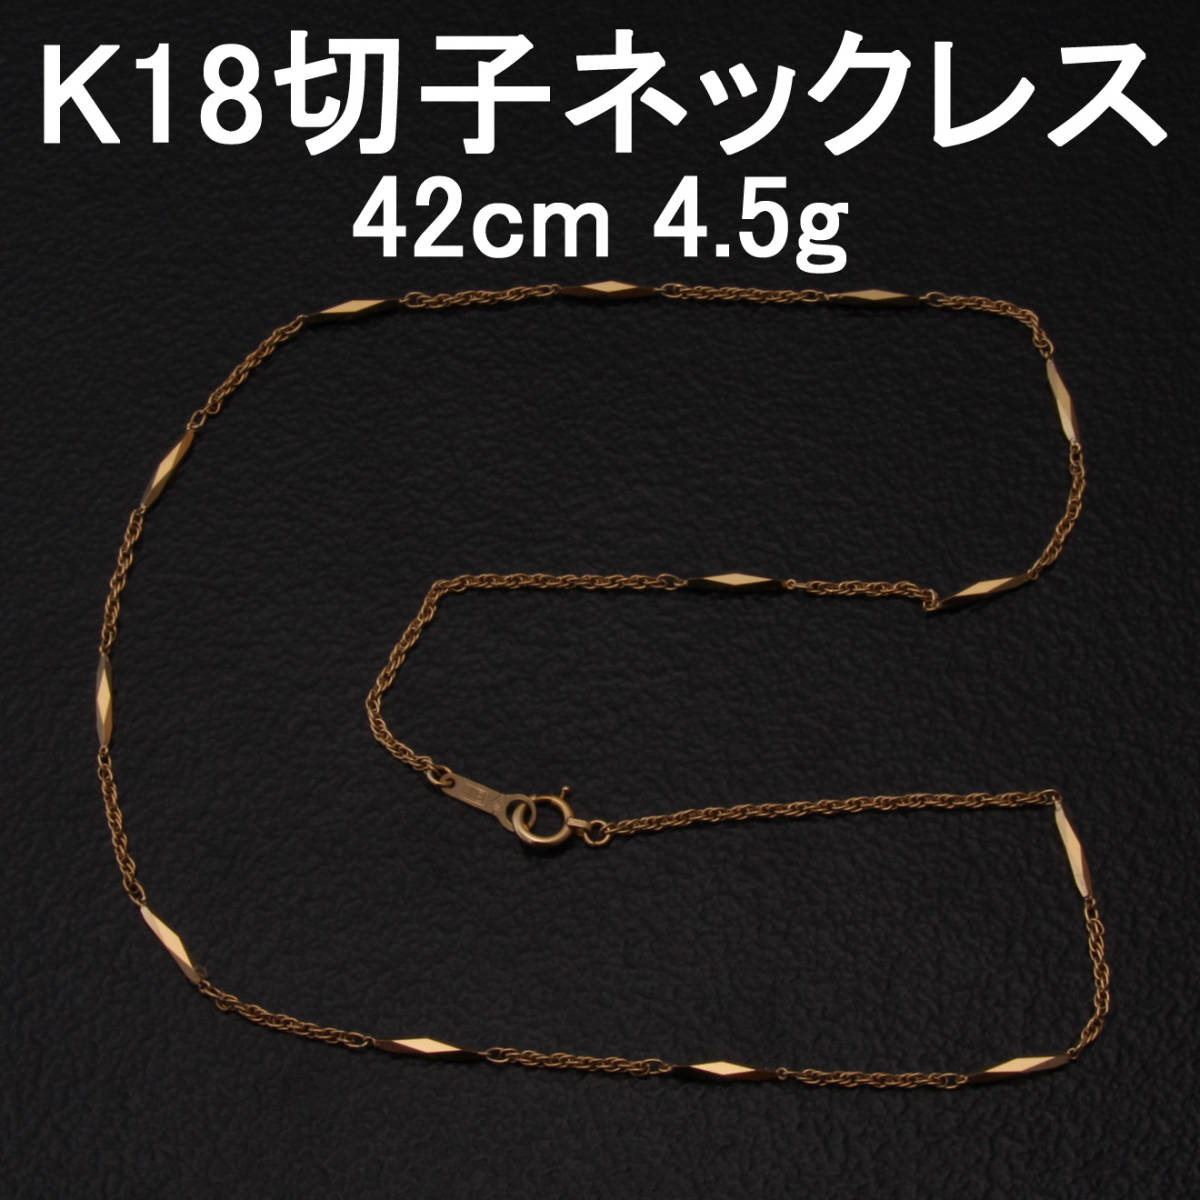 K18 18金 ネックレス 切子 42cm 約5g アンティーク アクセサリー